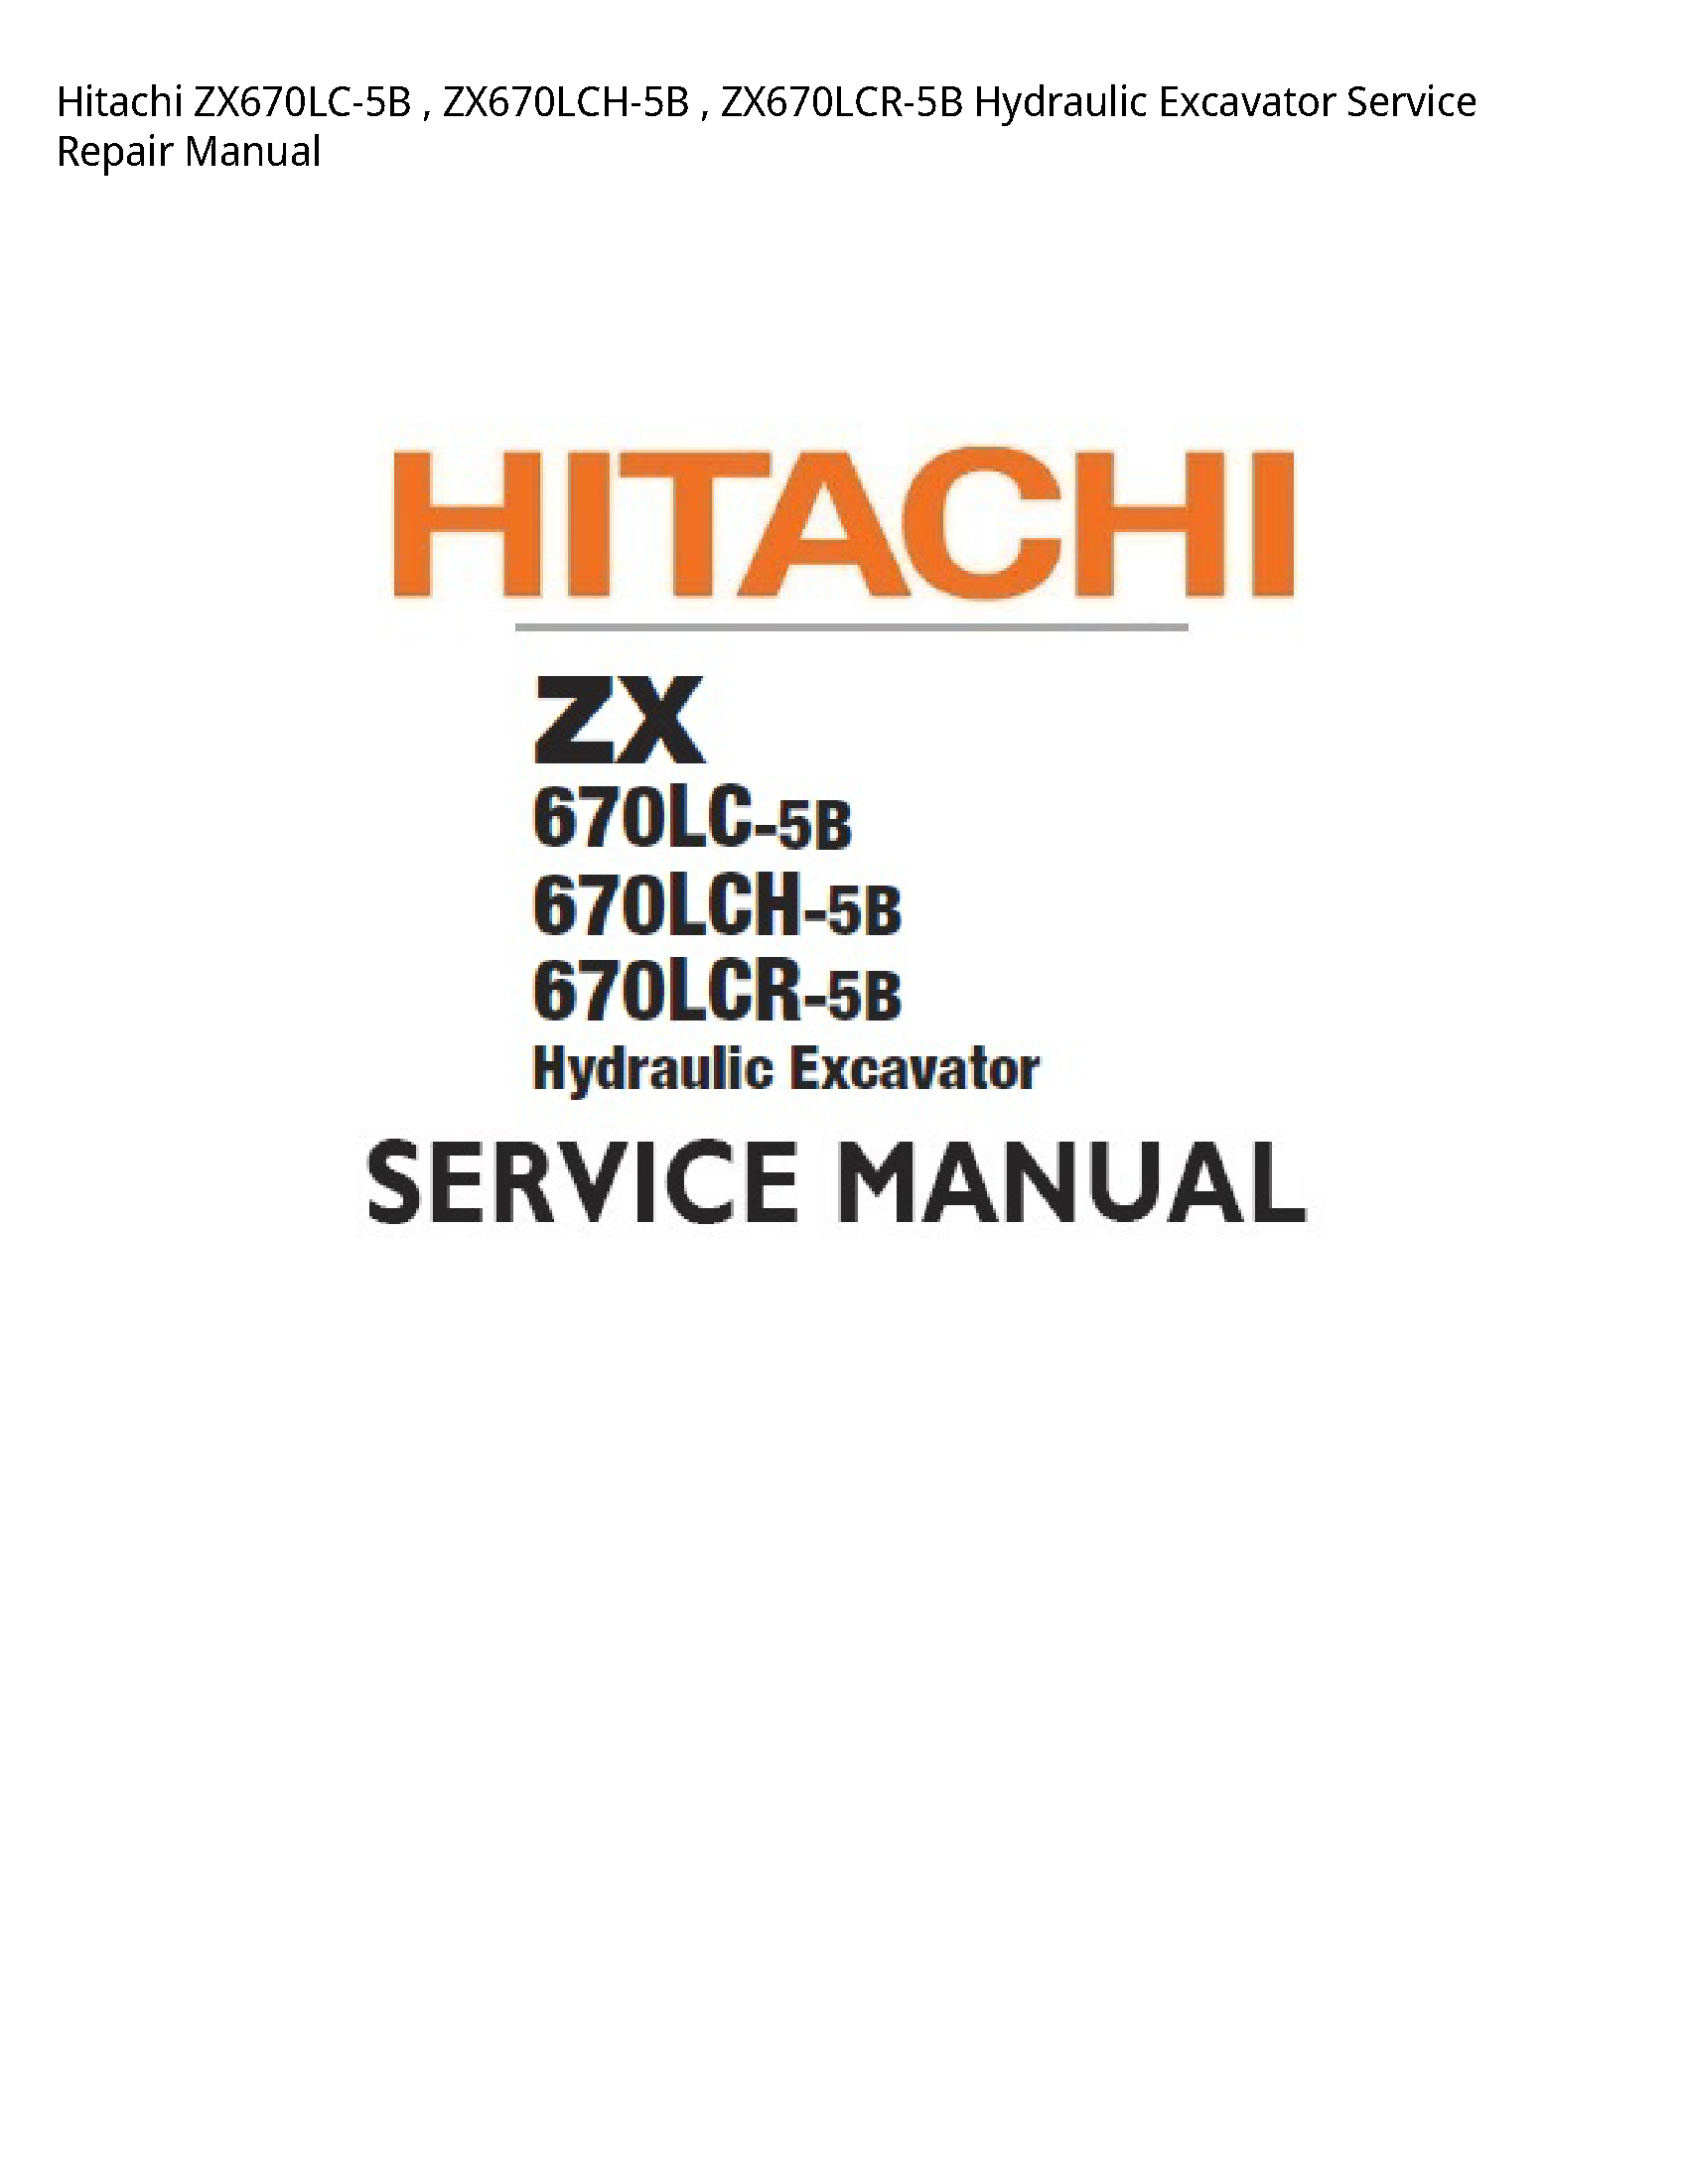 Hitachi ZX670LC-5B Hydraulic Excavator manual